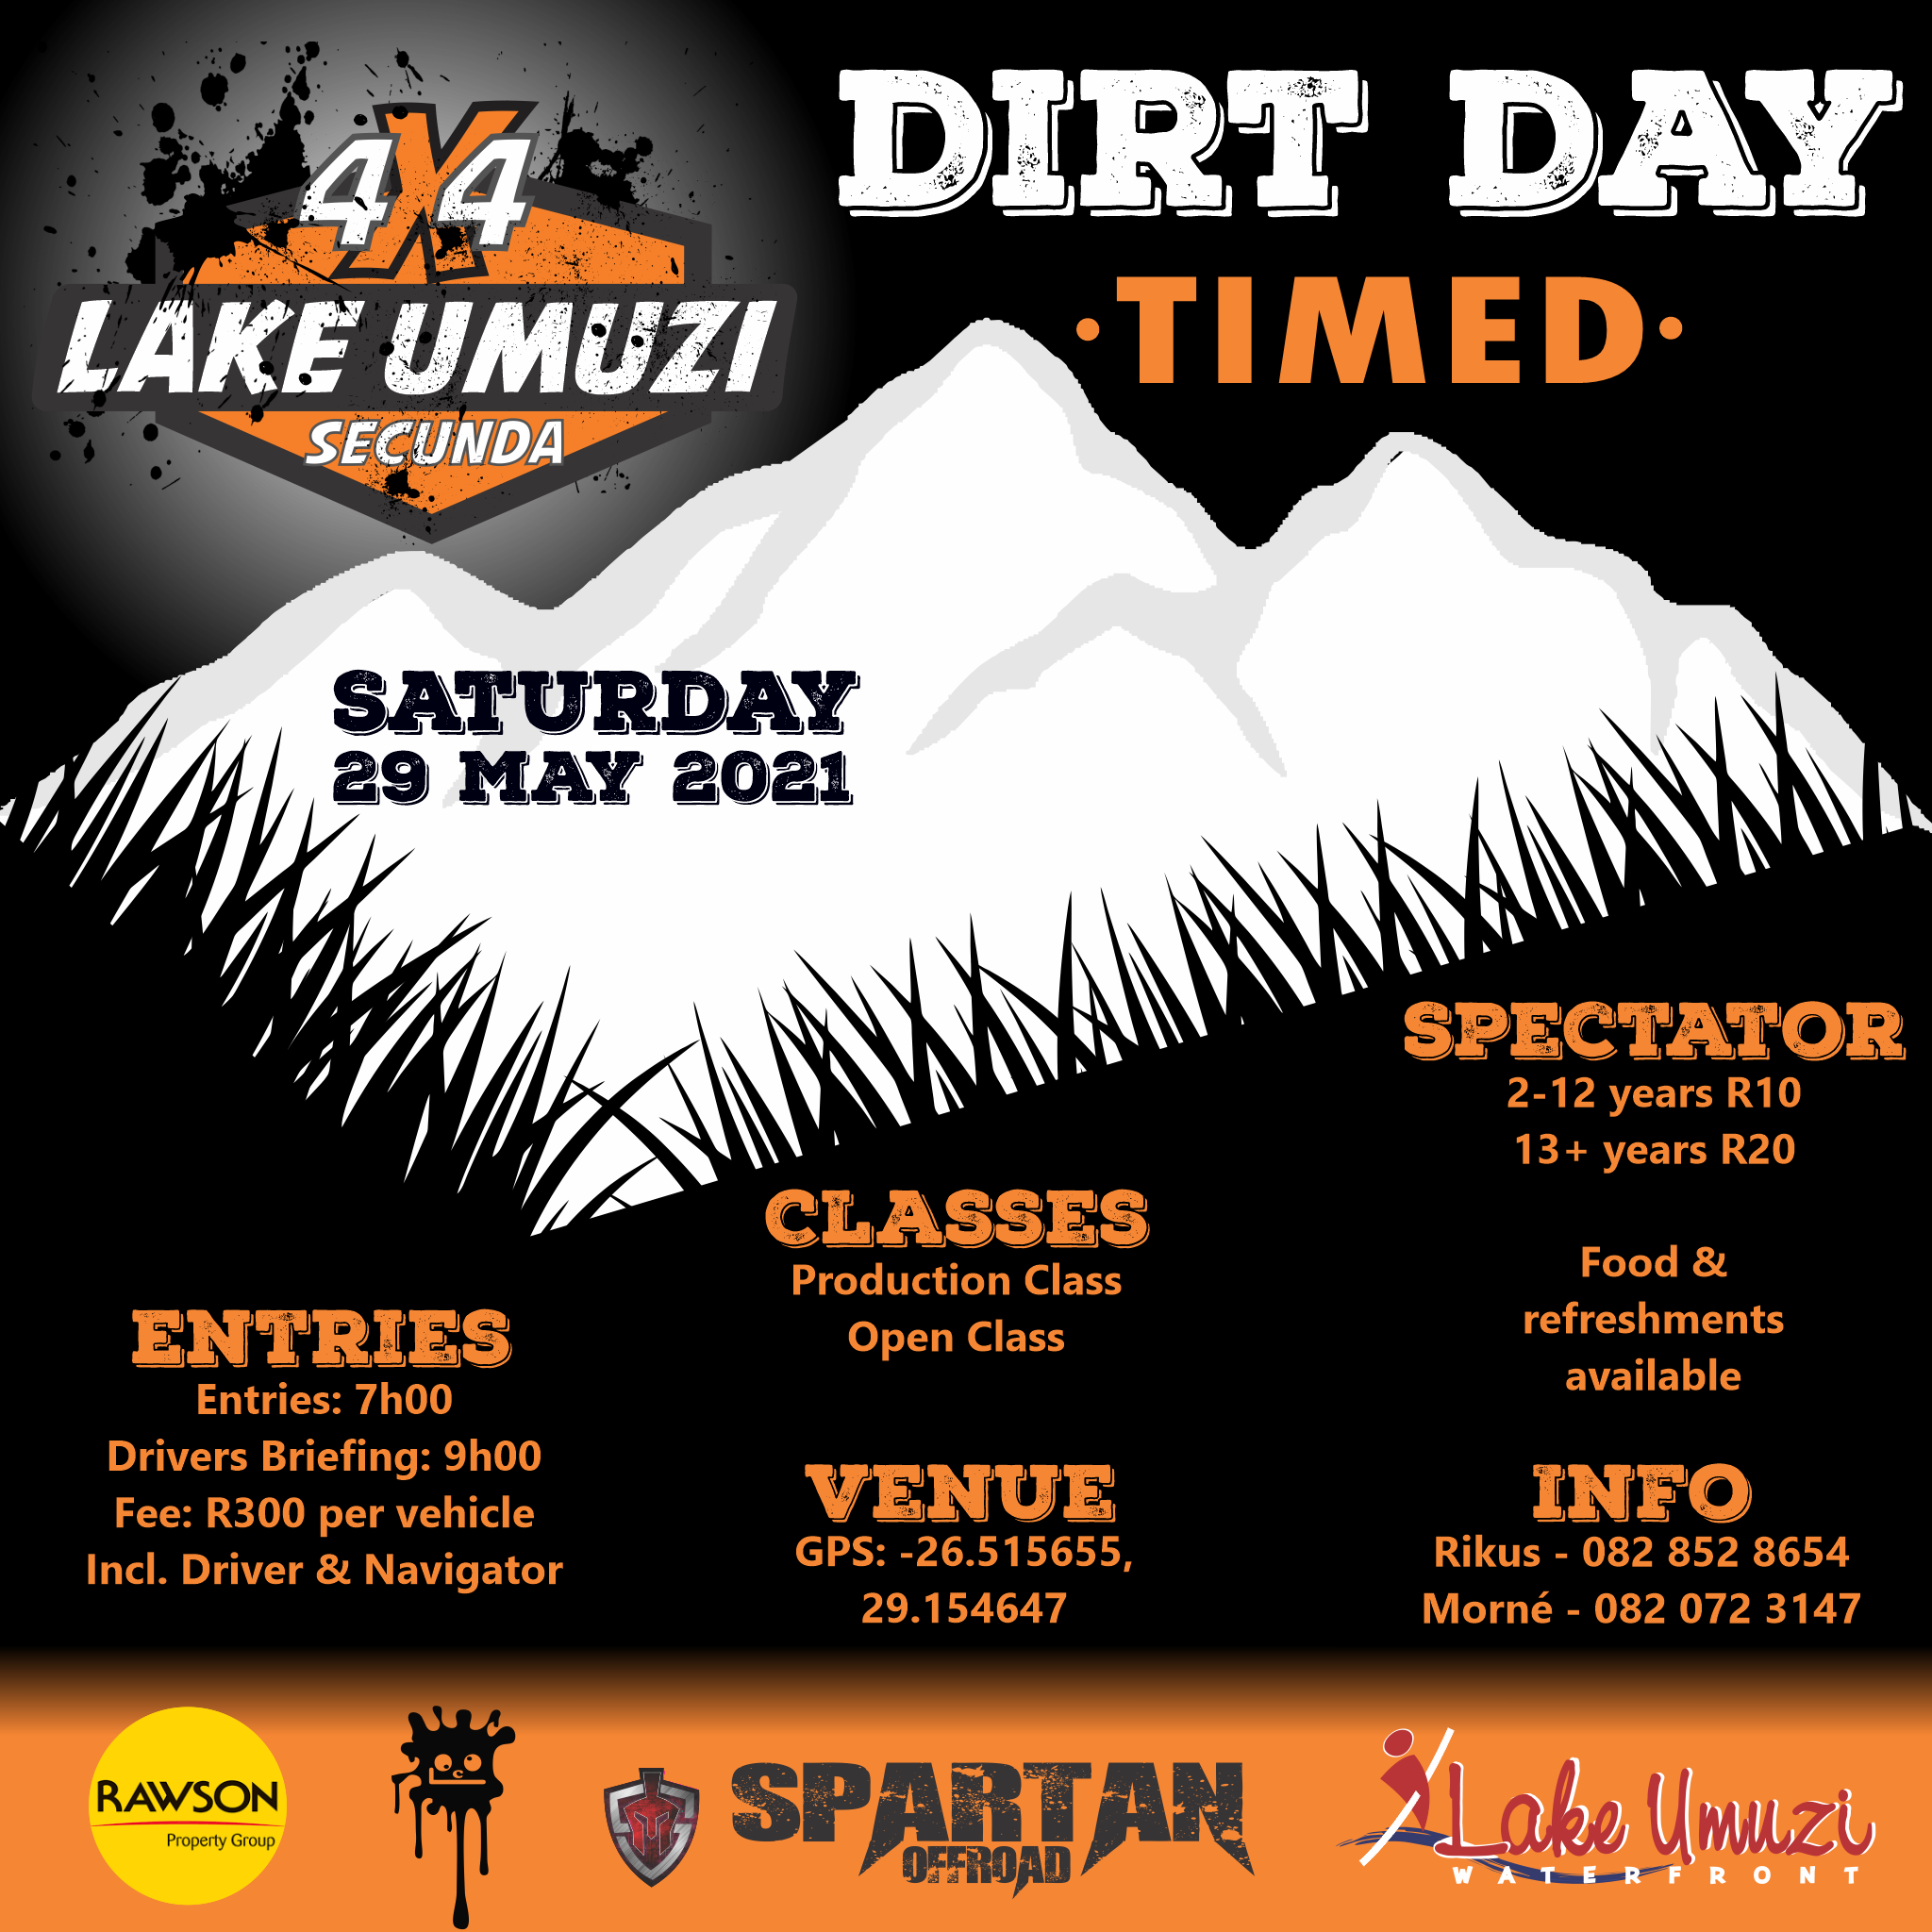 4x4 @ Lake Umuzi Dirt Day Timed